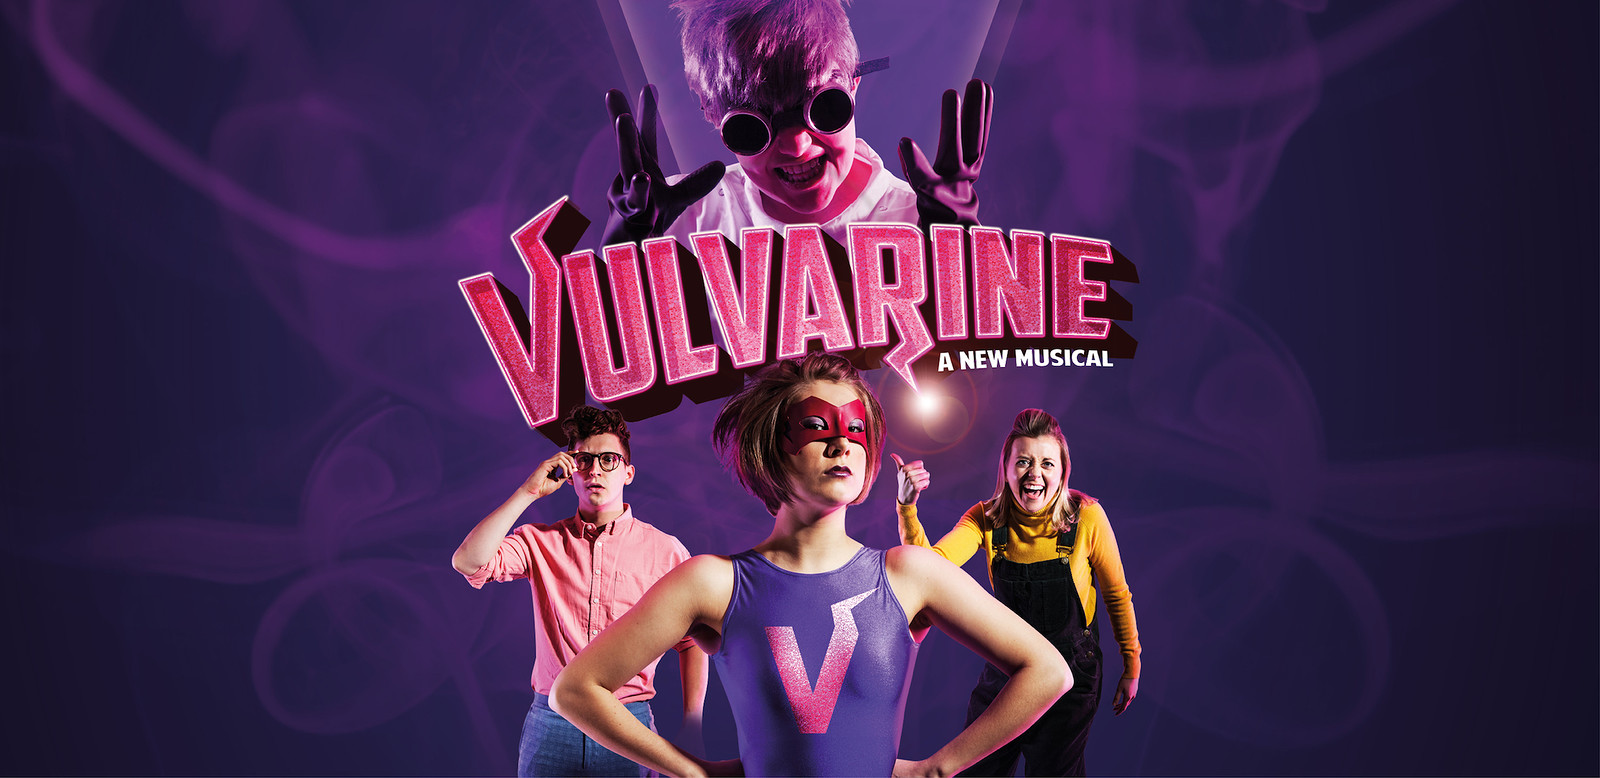 Vulvarine: A New Musical at The Wardrobe Theatre